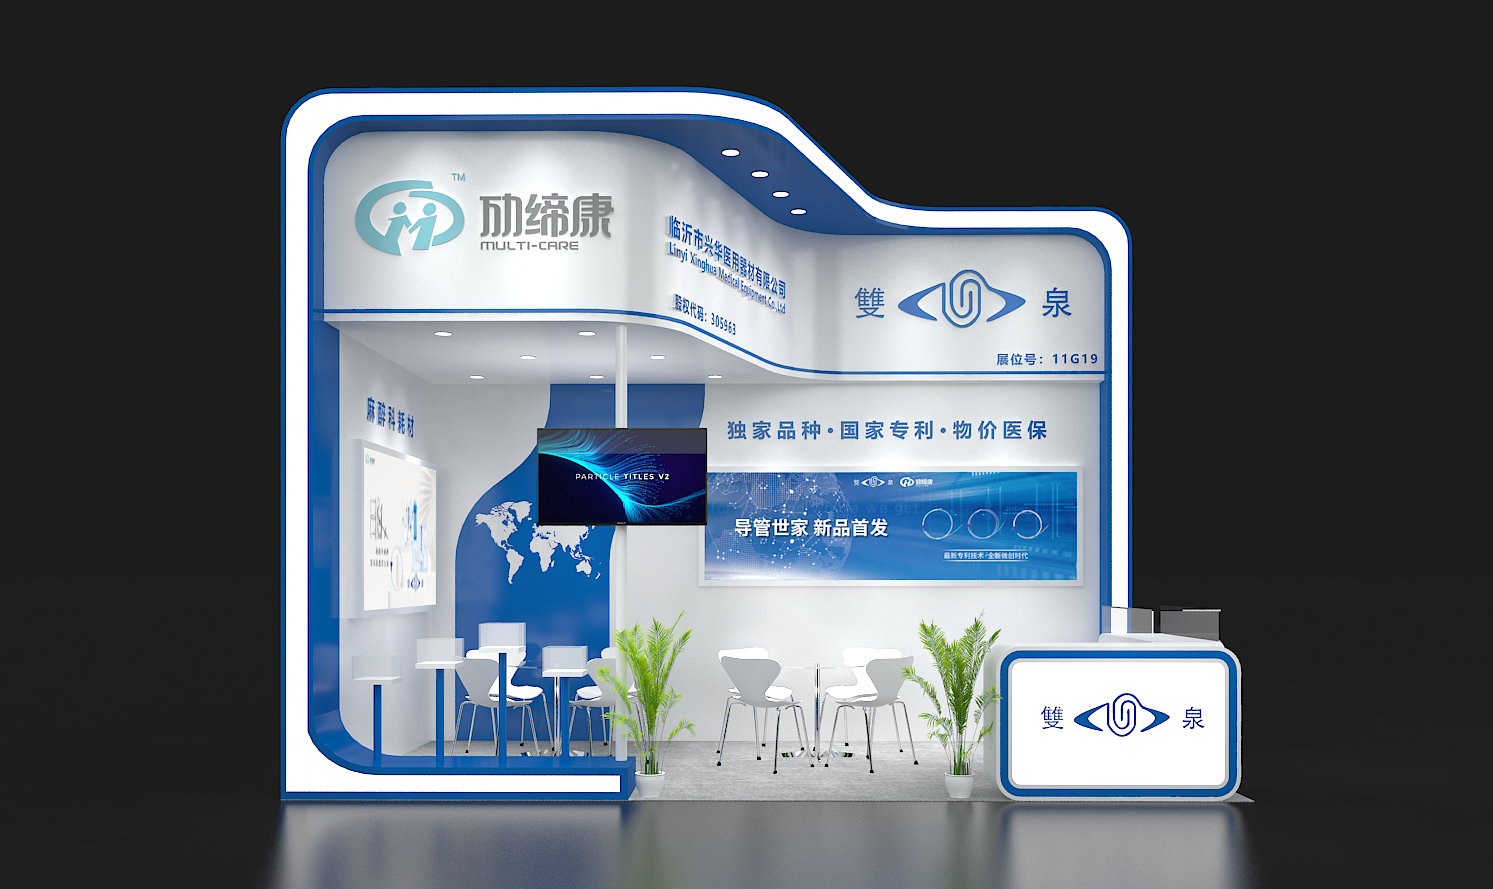 88st China International Medical Equipment  Fair